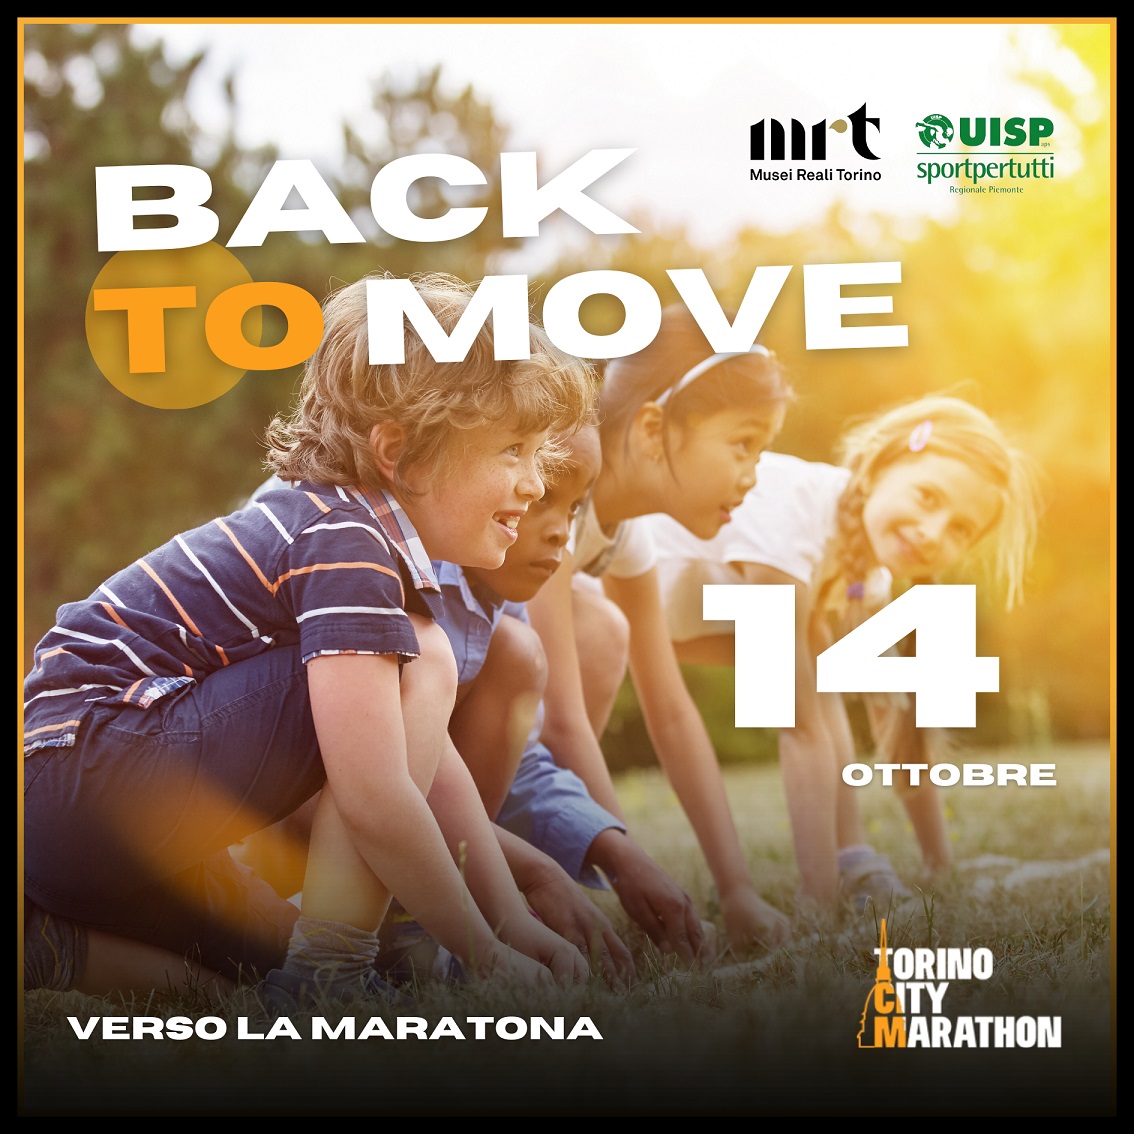 Back to move… verso la Torino City Marathon